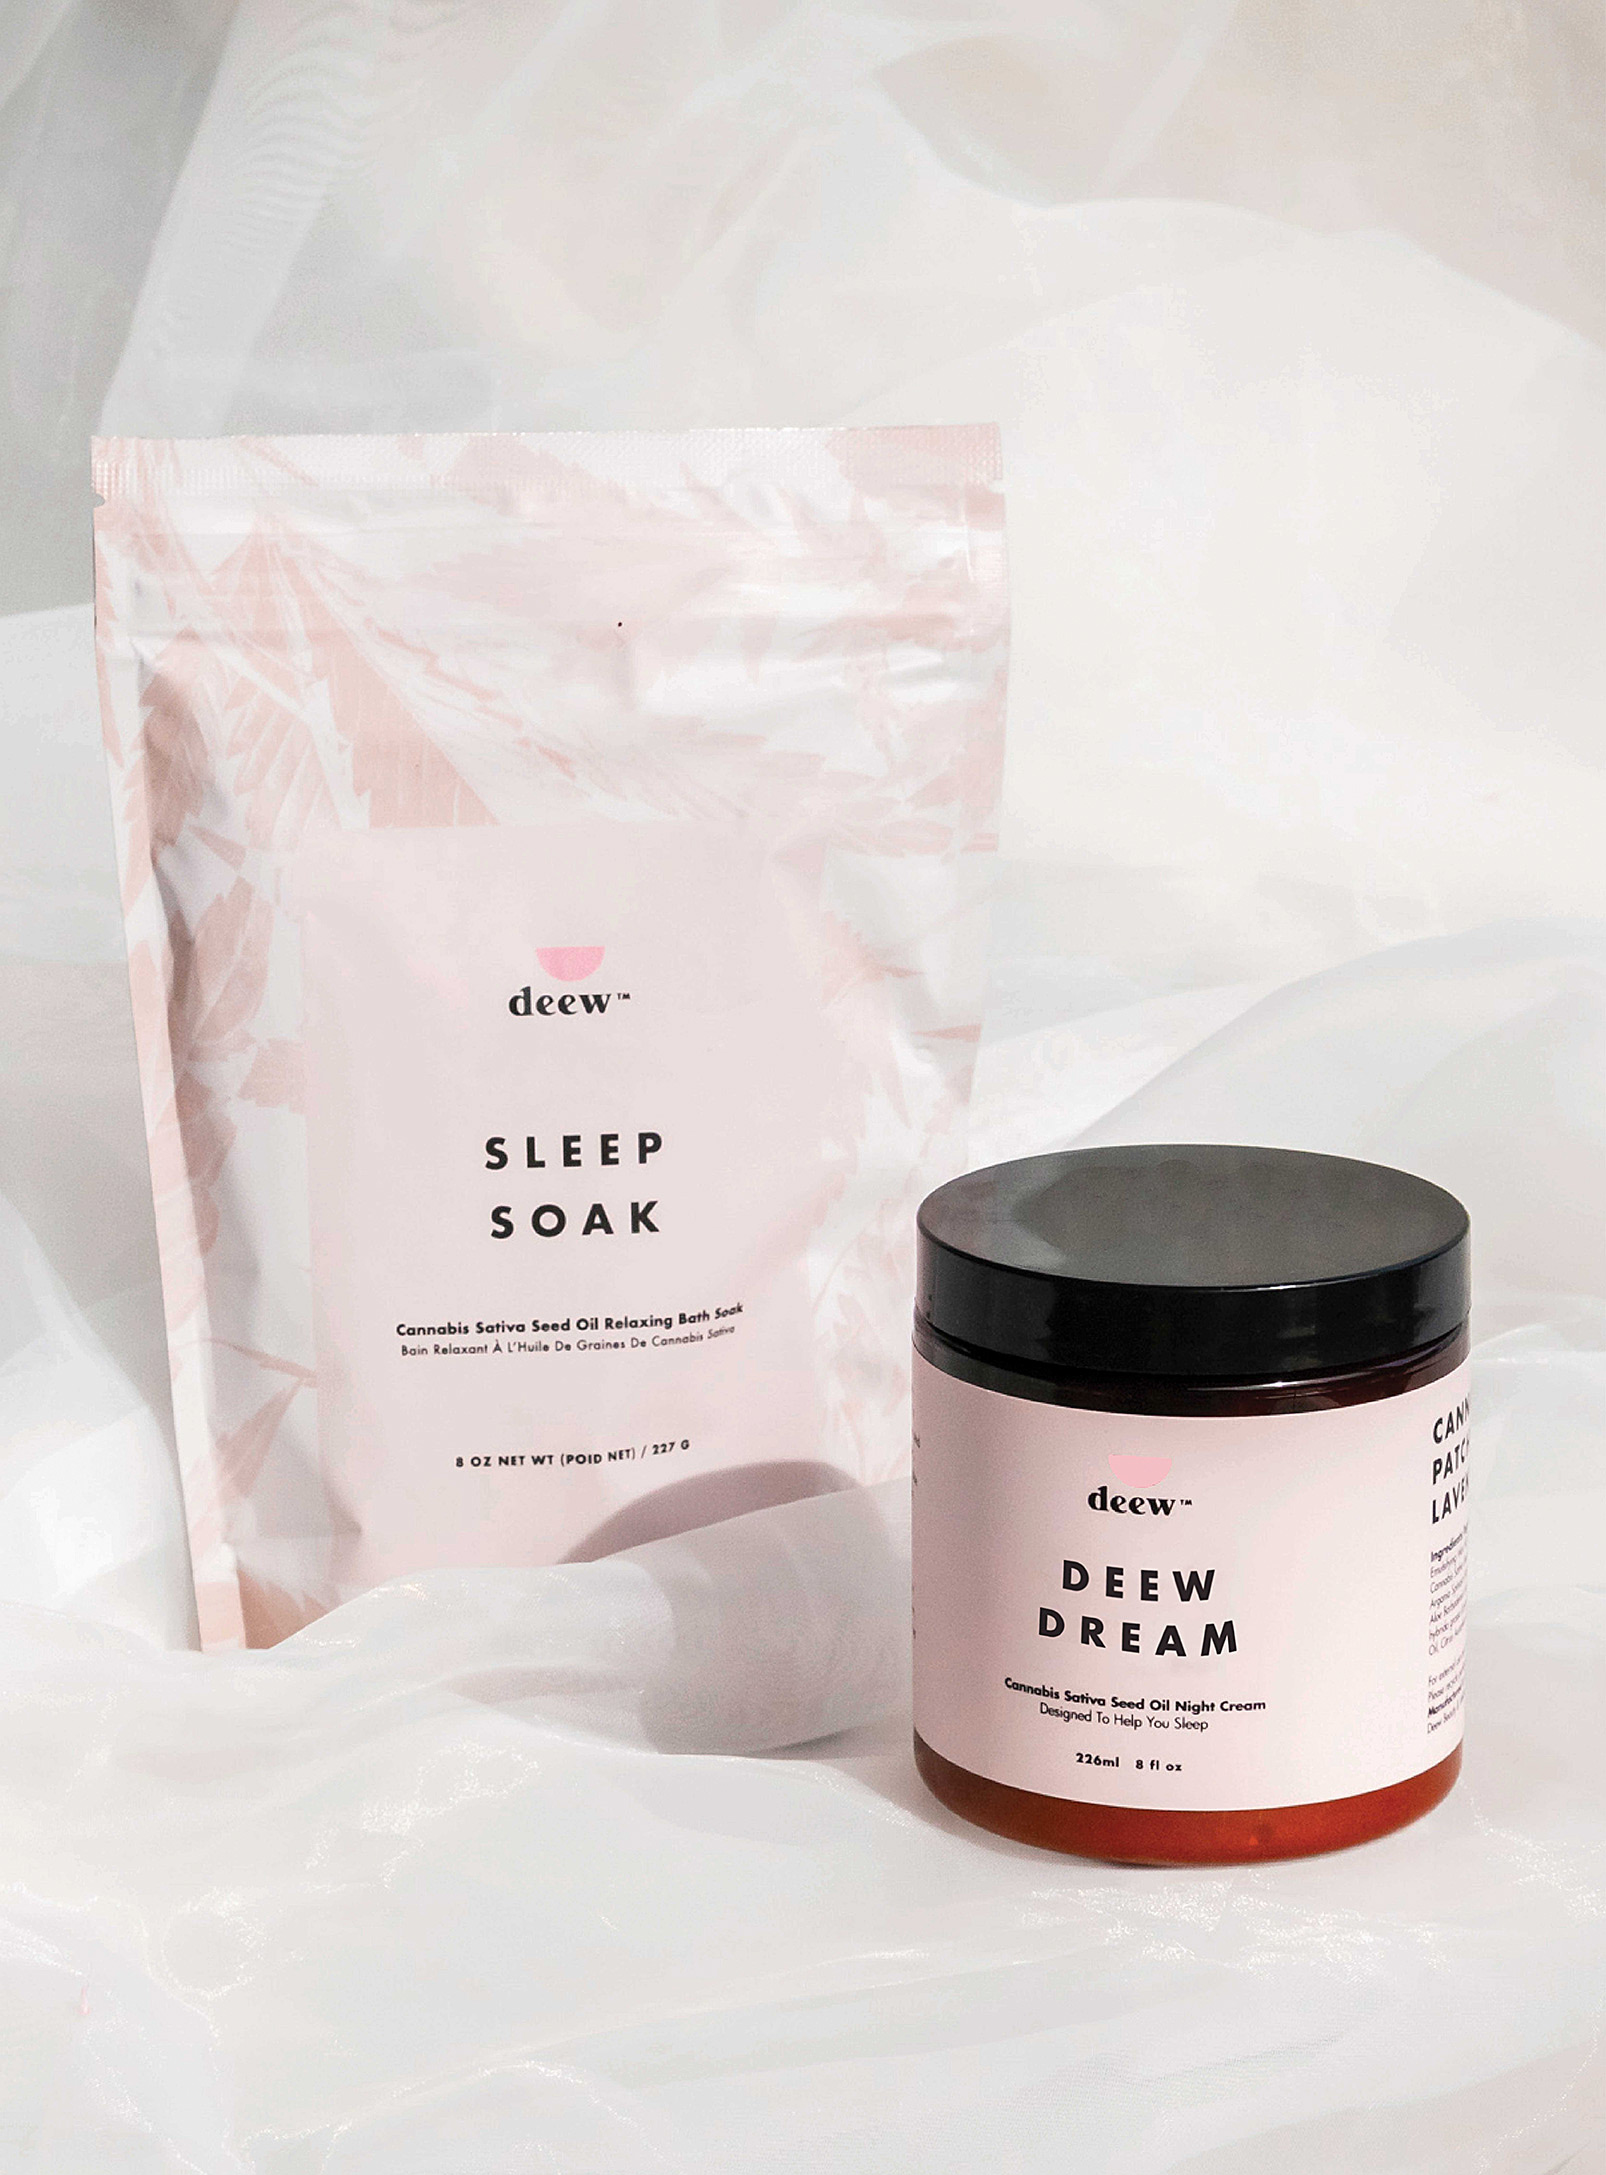 Deew - Beauty Sleep hemp oil set